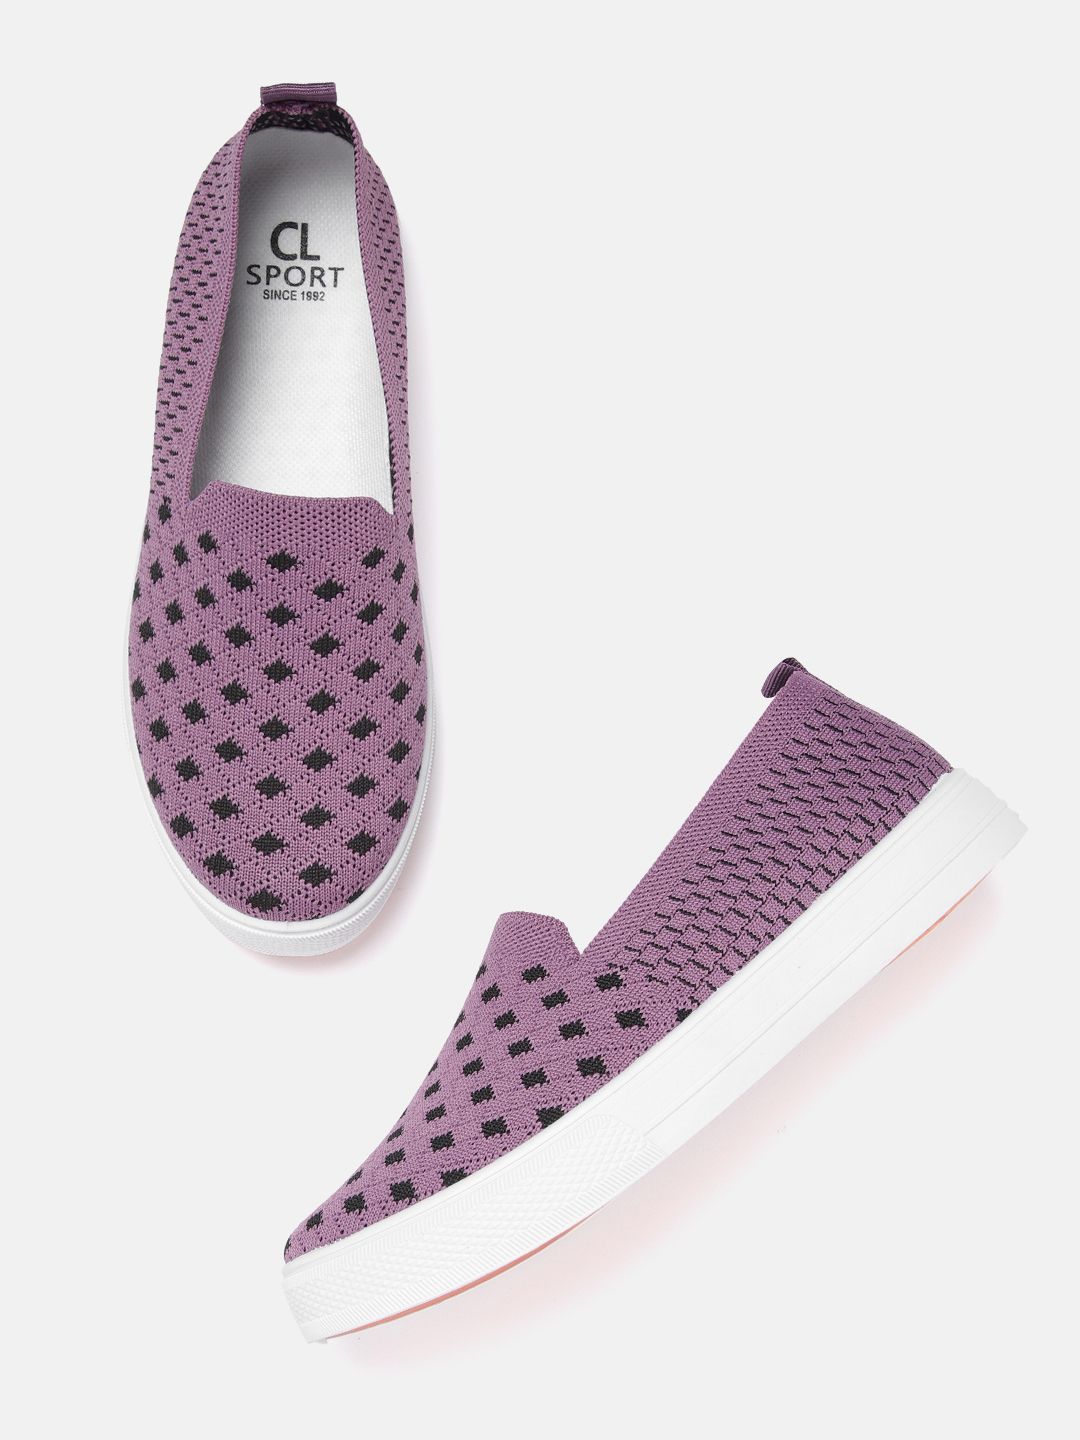 Carlton London sports Women Lavender & Black Geometric Woven Design Slip-On Sneakers Price in India